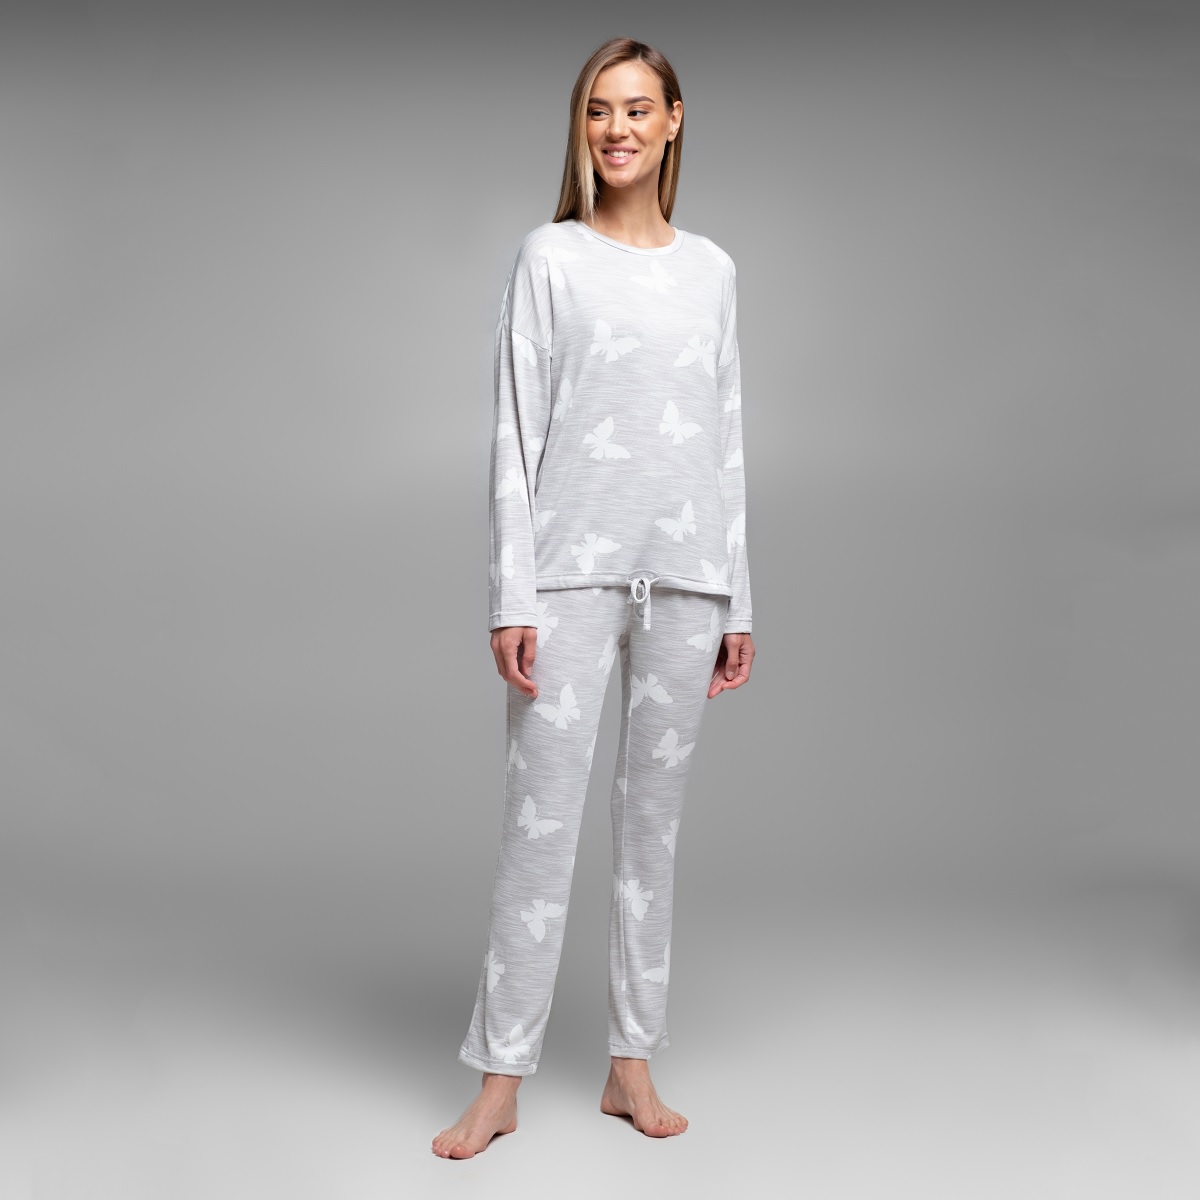 Пижама Nika цвет: светло-бежевый (xL), размер xL